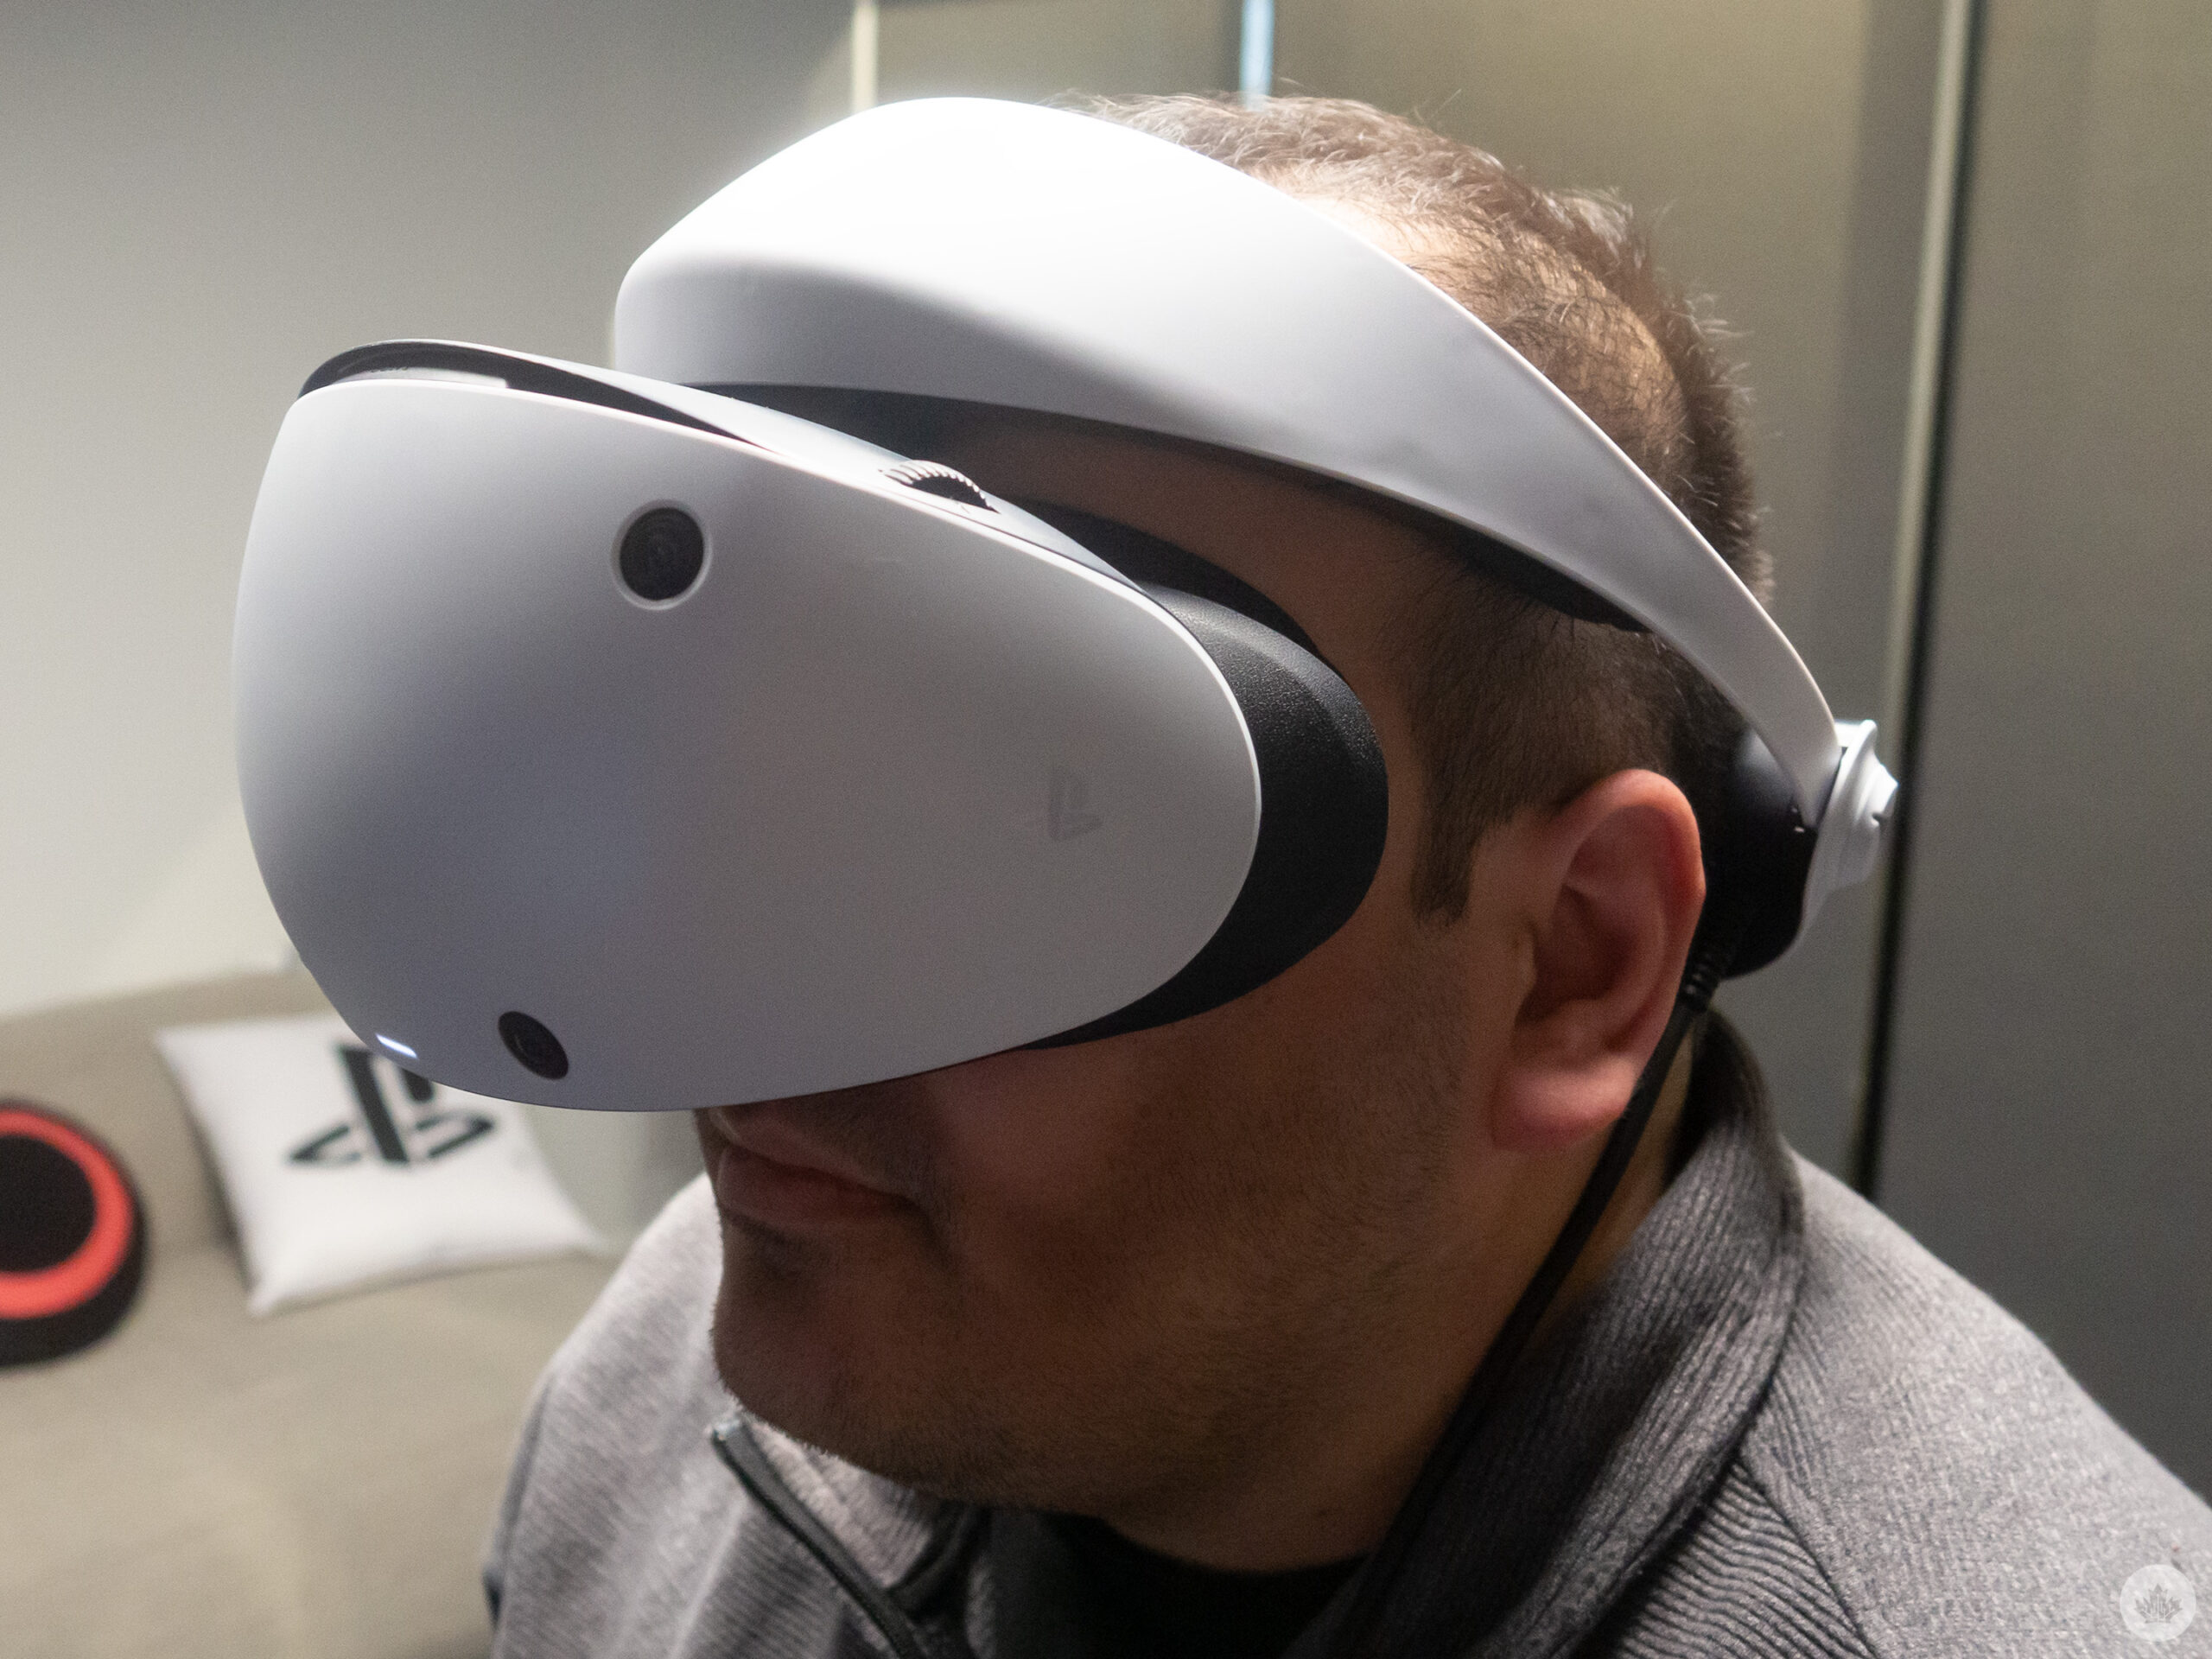 PlayStation VR2 headset on head